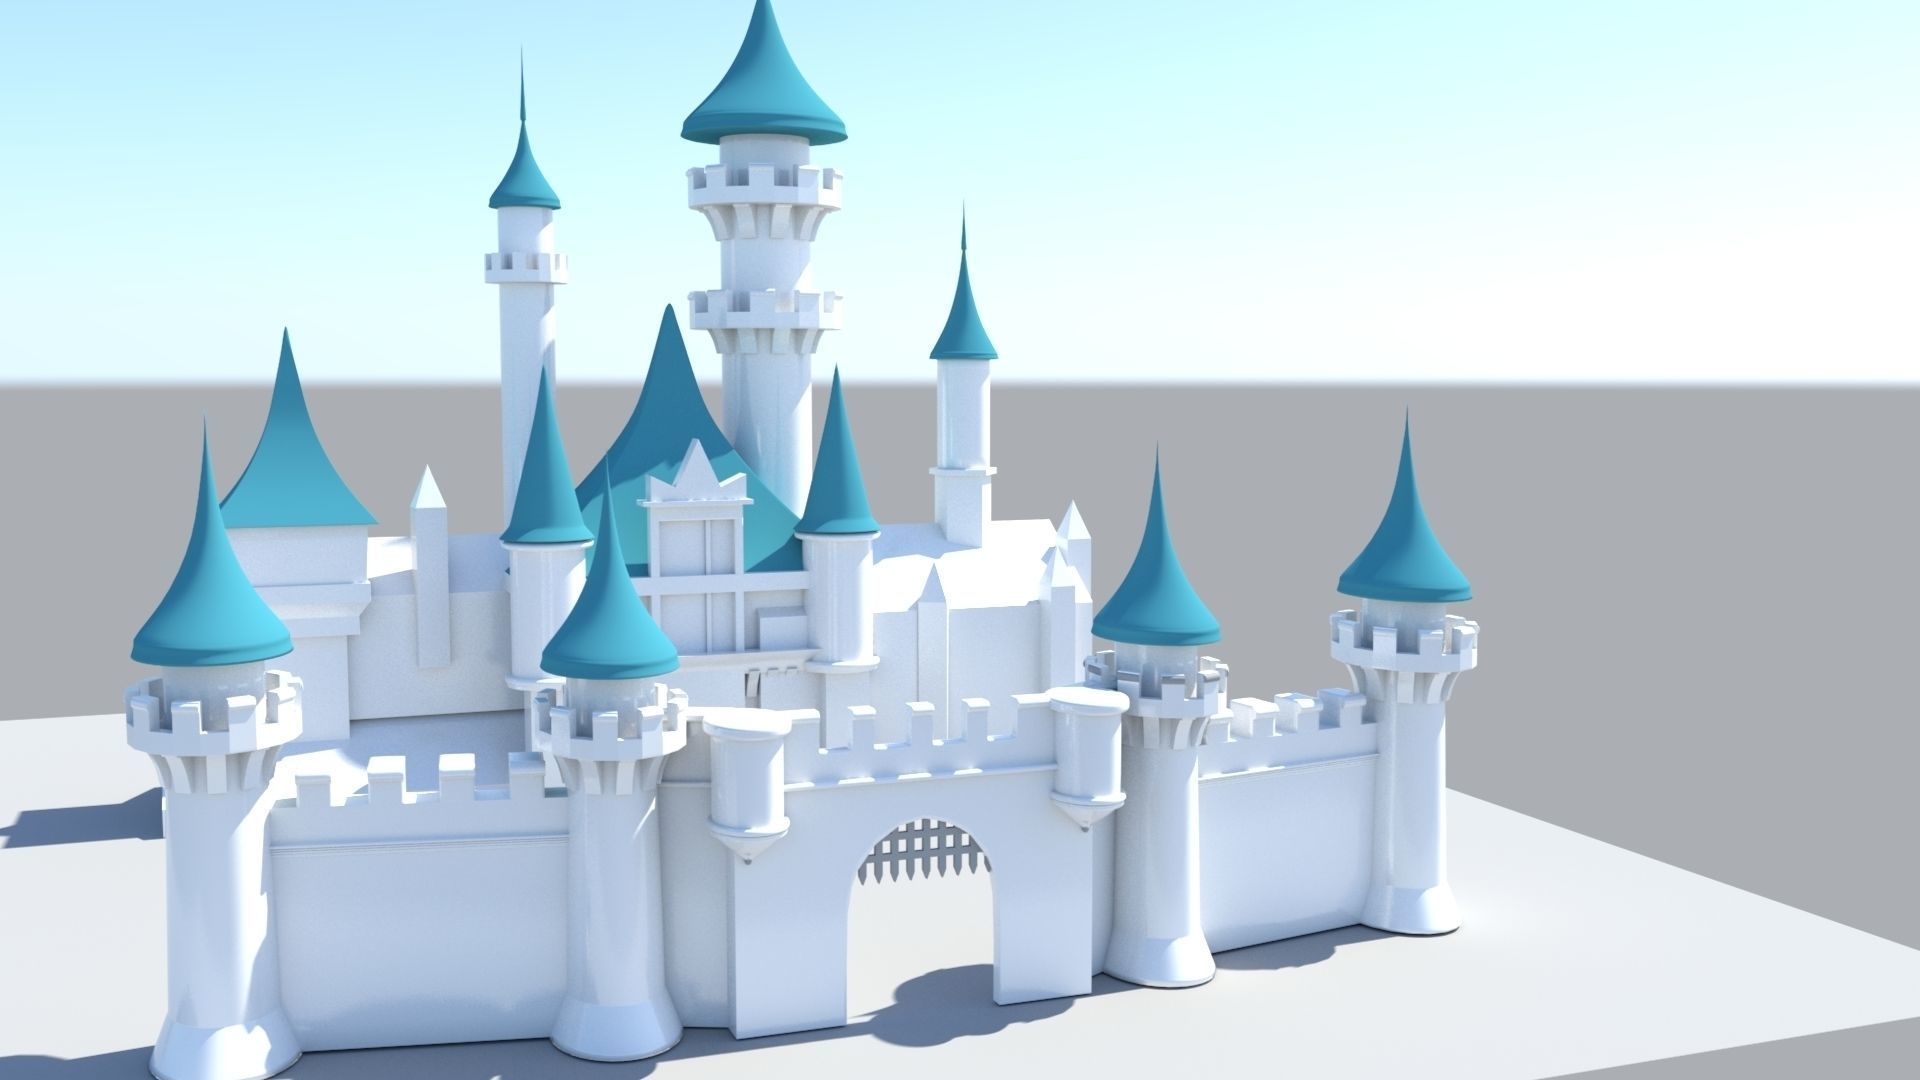 Disney Castle 3D model